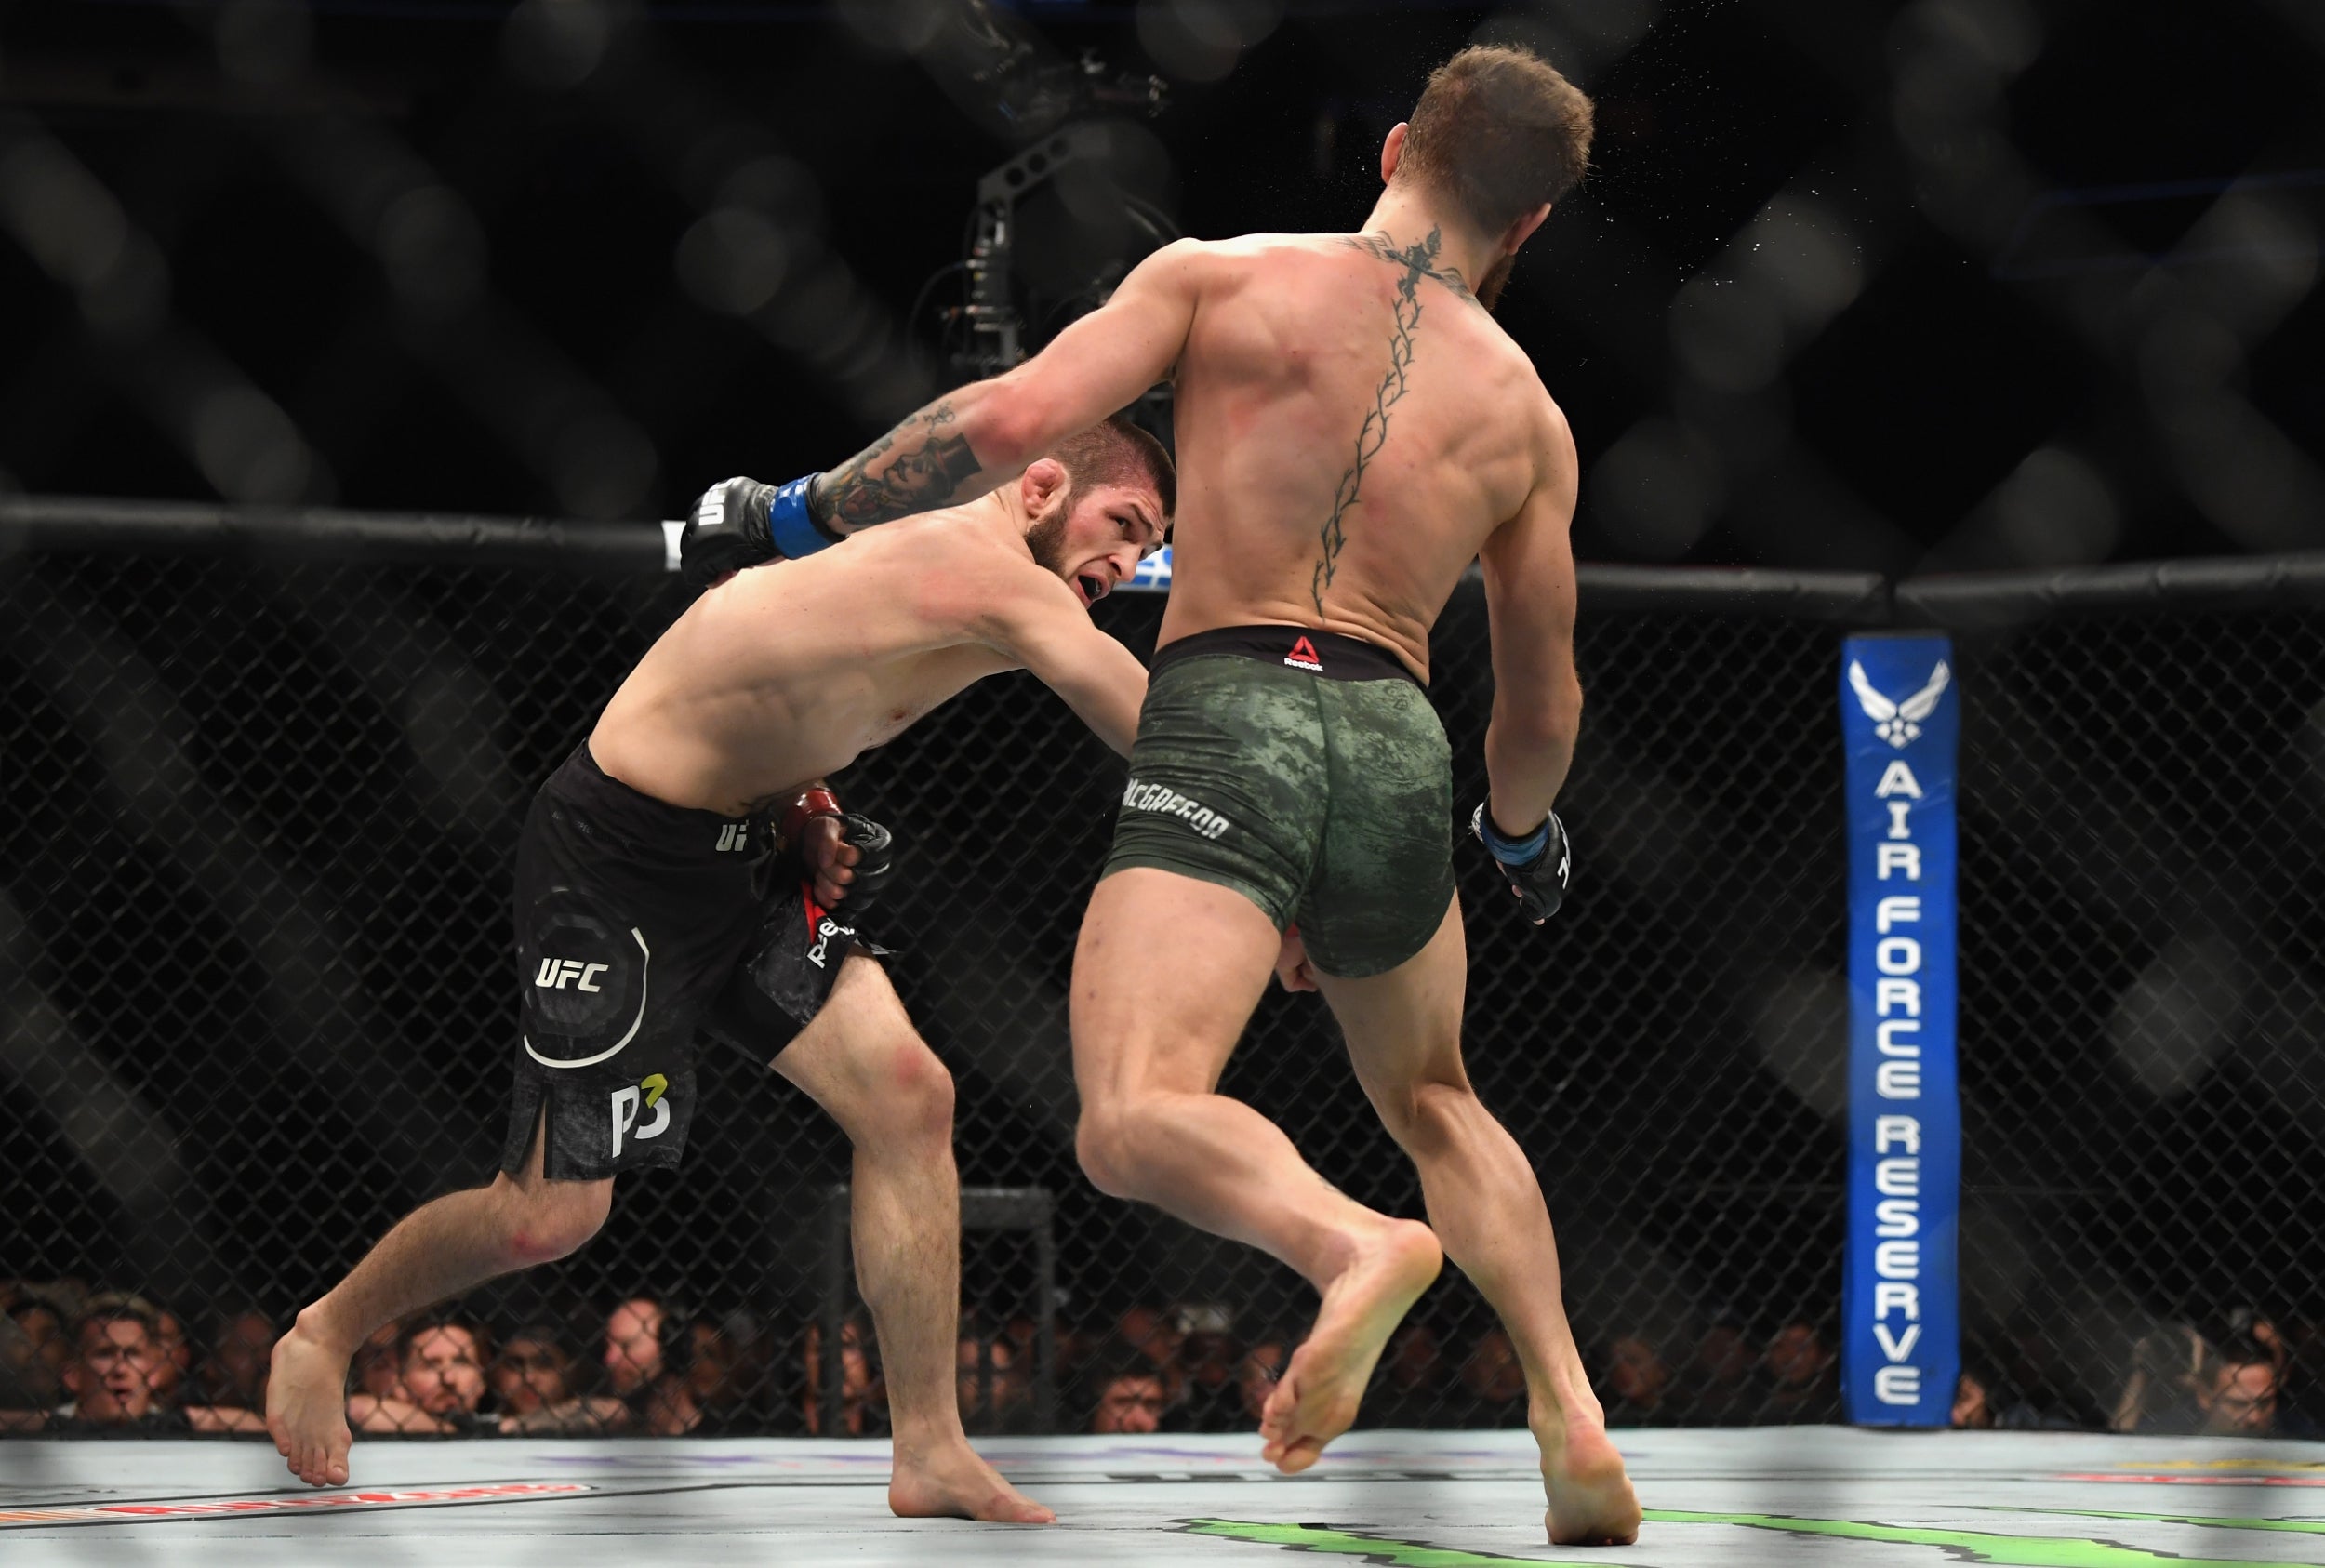 Khabib Nurmagomedov open to reconciling with Conor McGregor after UFC